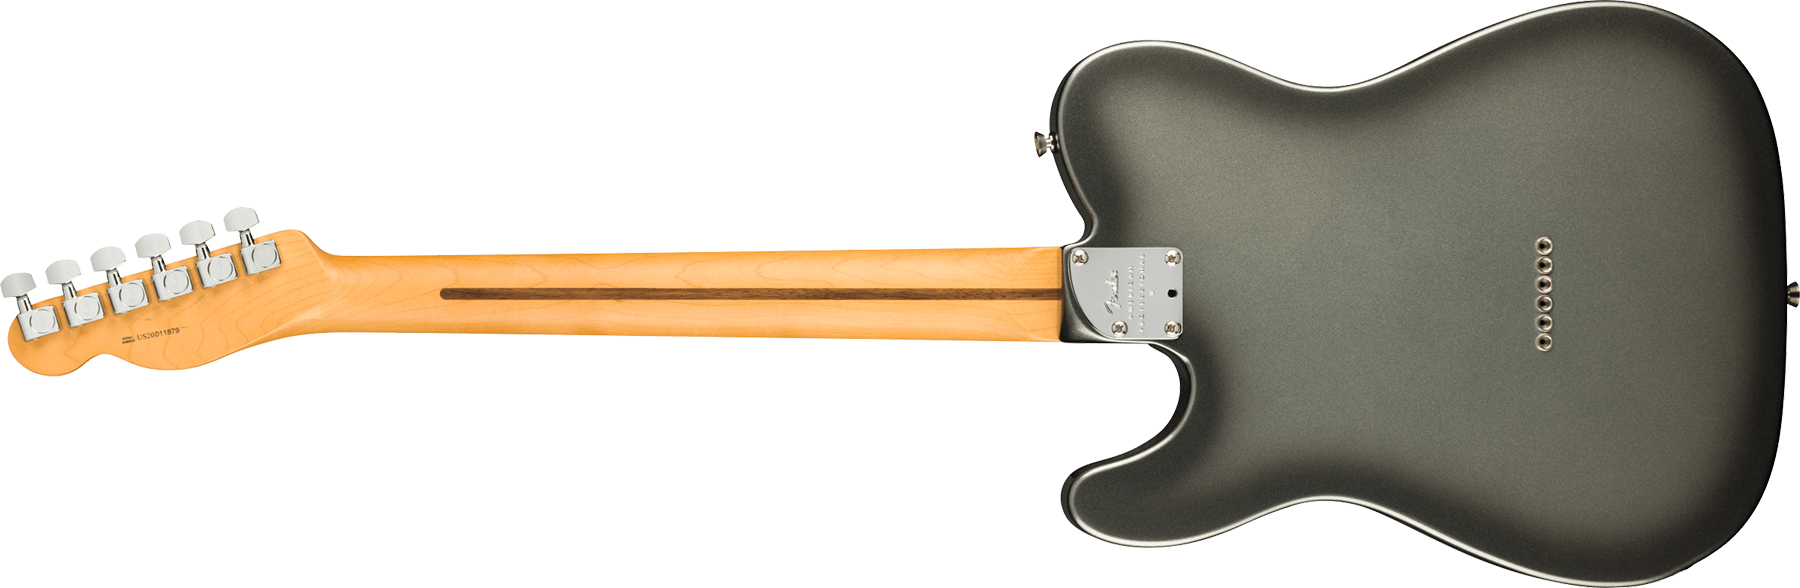 Fender Tele American Professional Ii Usa Rw - Mercury - Televorm elektrische gitaar - Variation 1